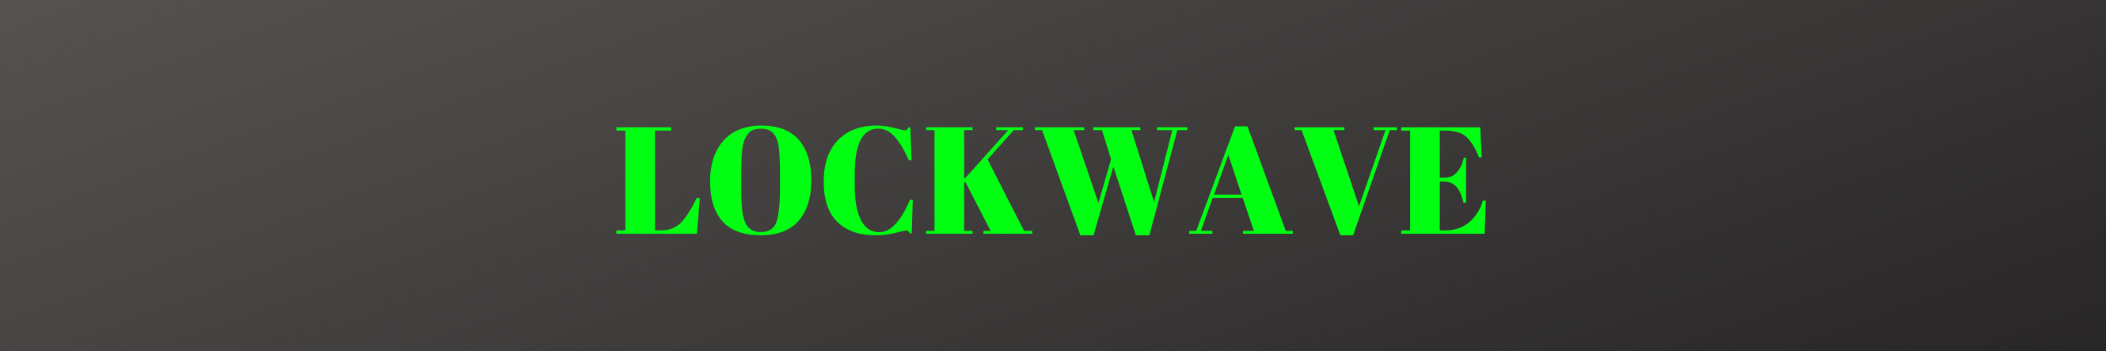 Lockwave